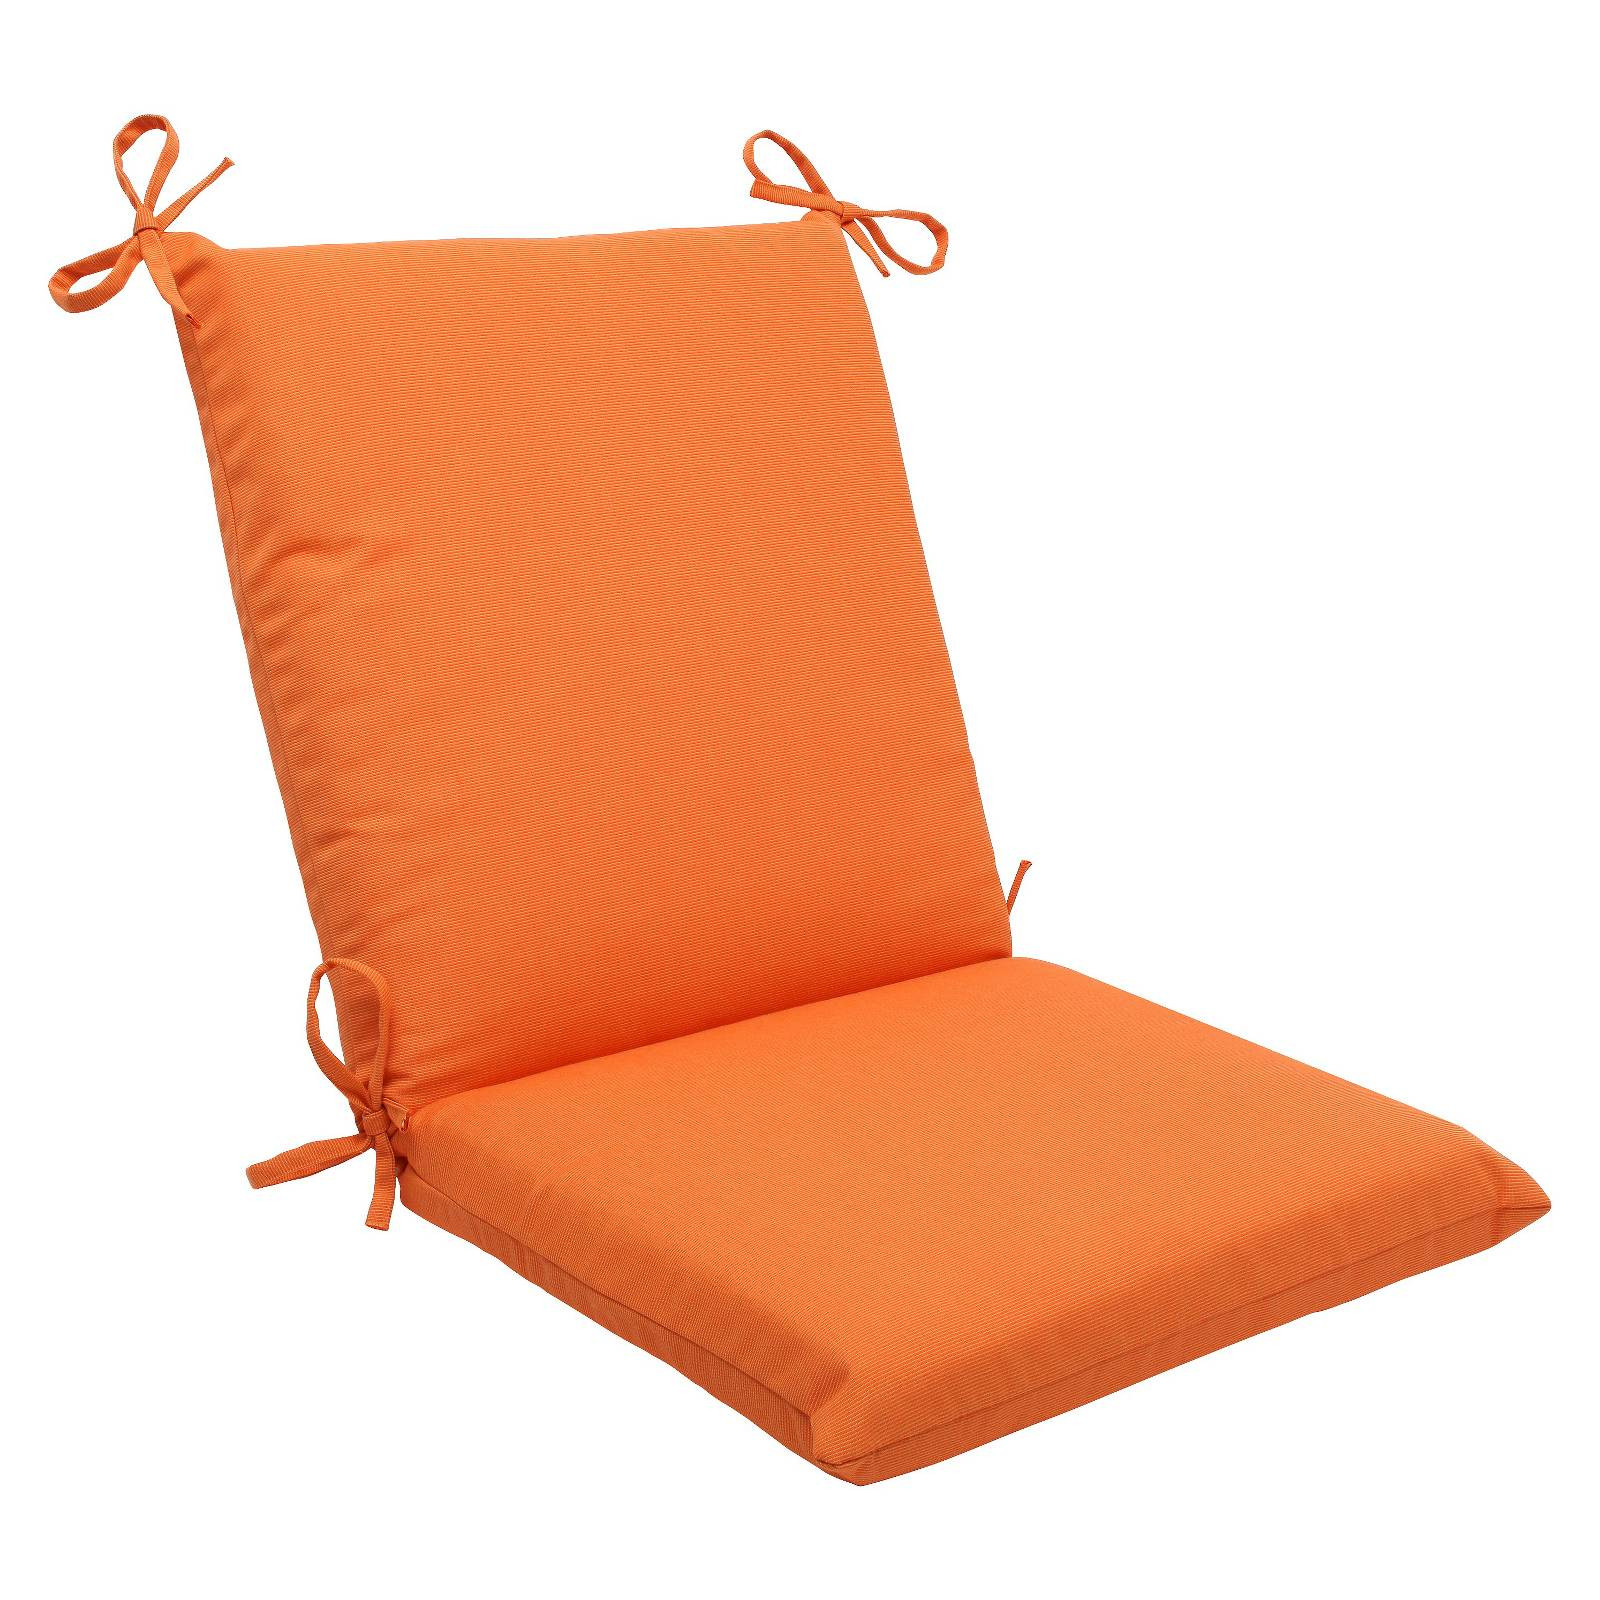 Best ideas about Sunbrella Patio Cushions
. Save or Pin Sunbrella Canvas Outdoor Squared Edge Chair Cushion Now.